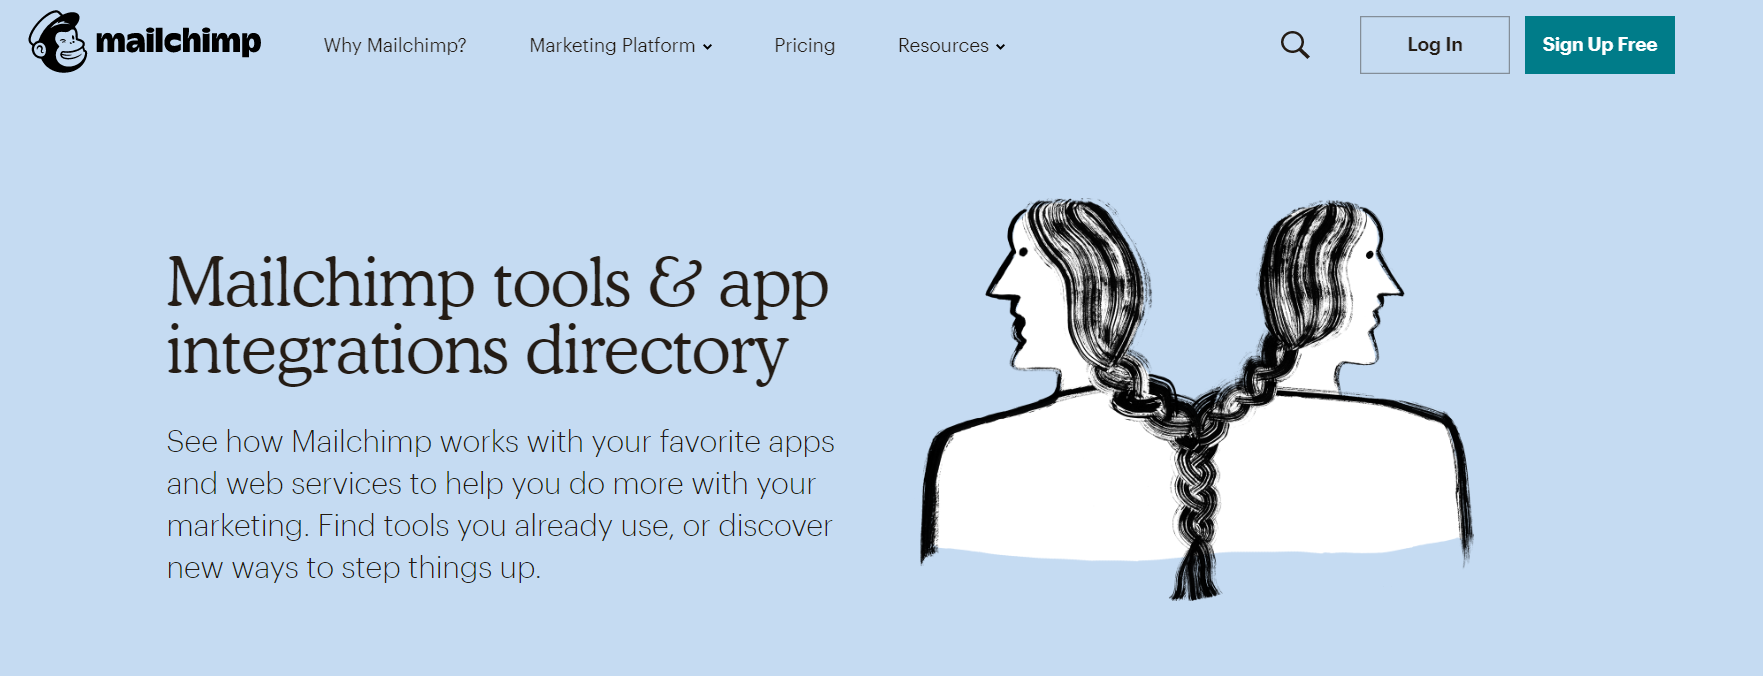 Mailchimp-Tools-Apps-Integration-Directory